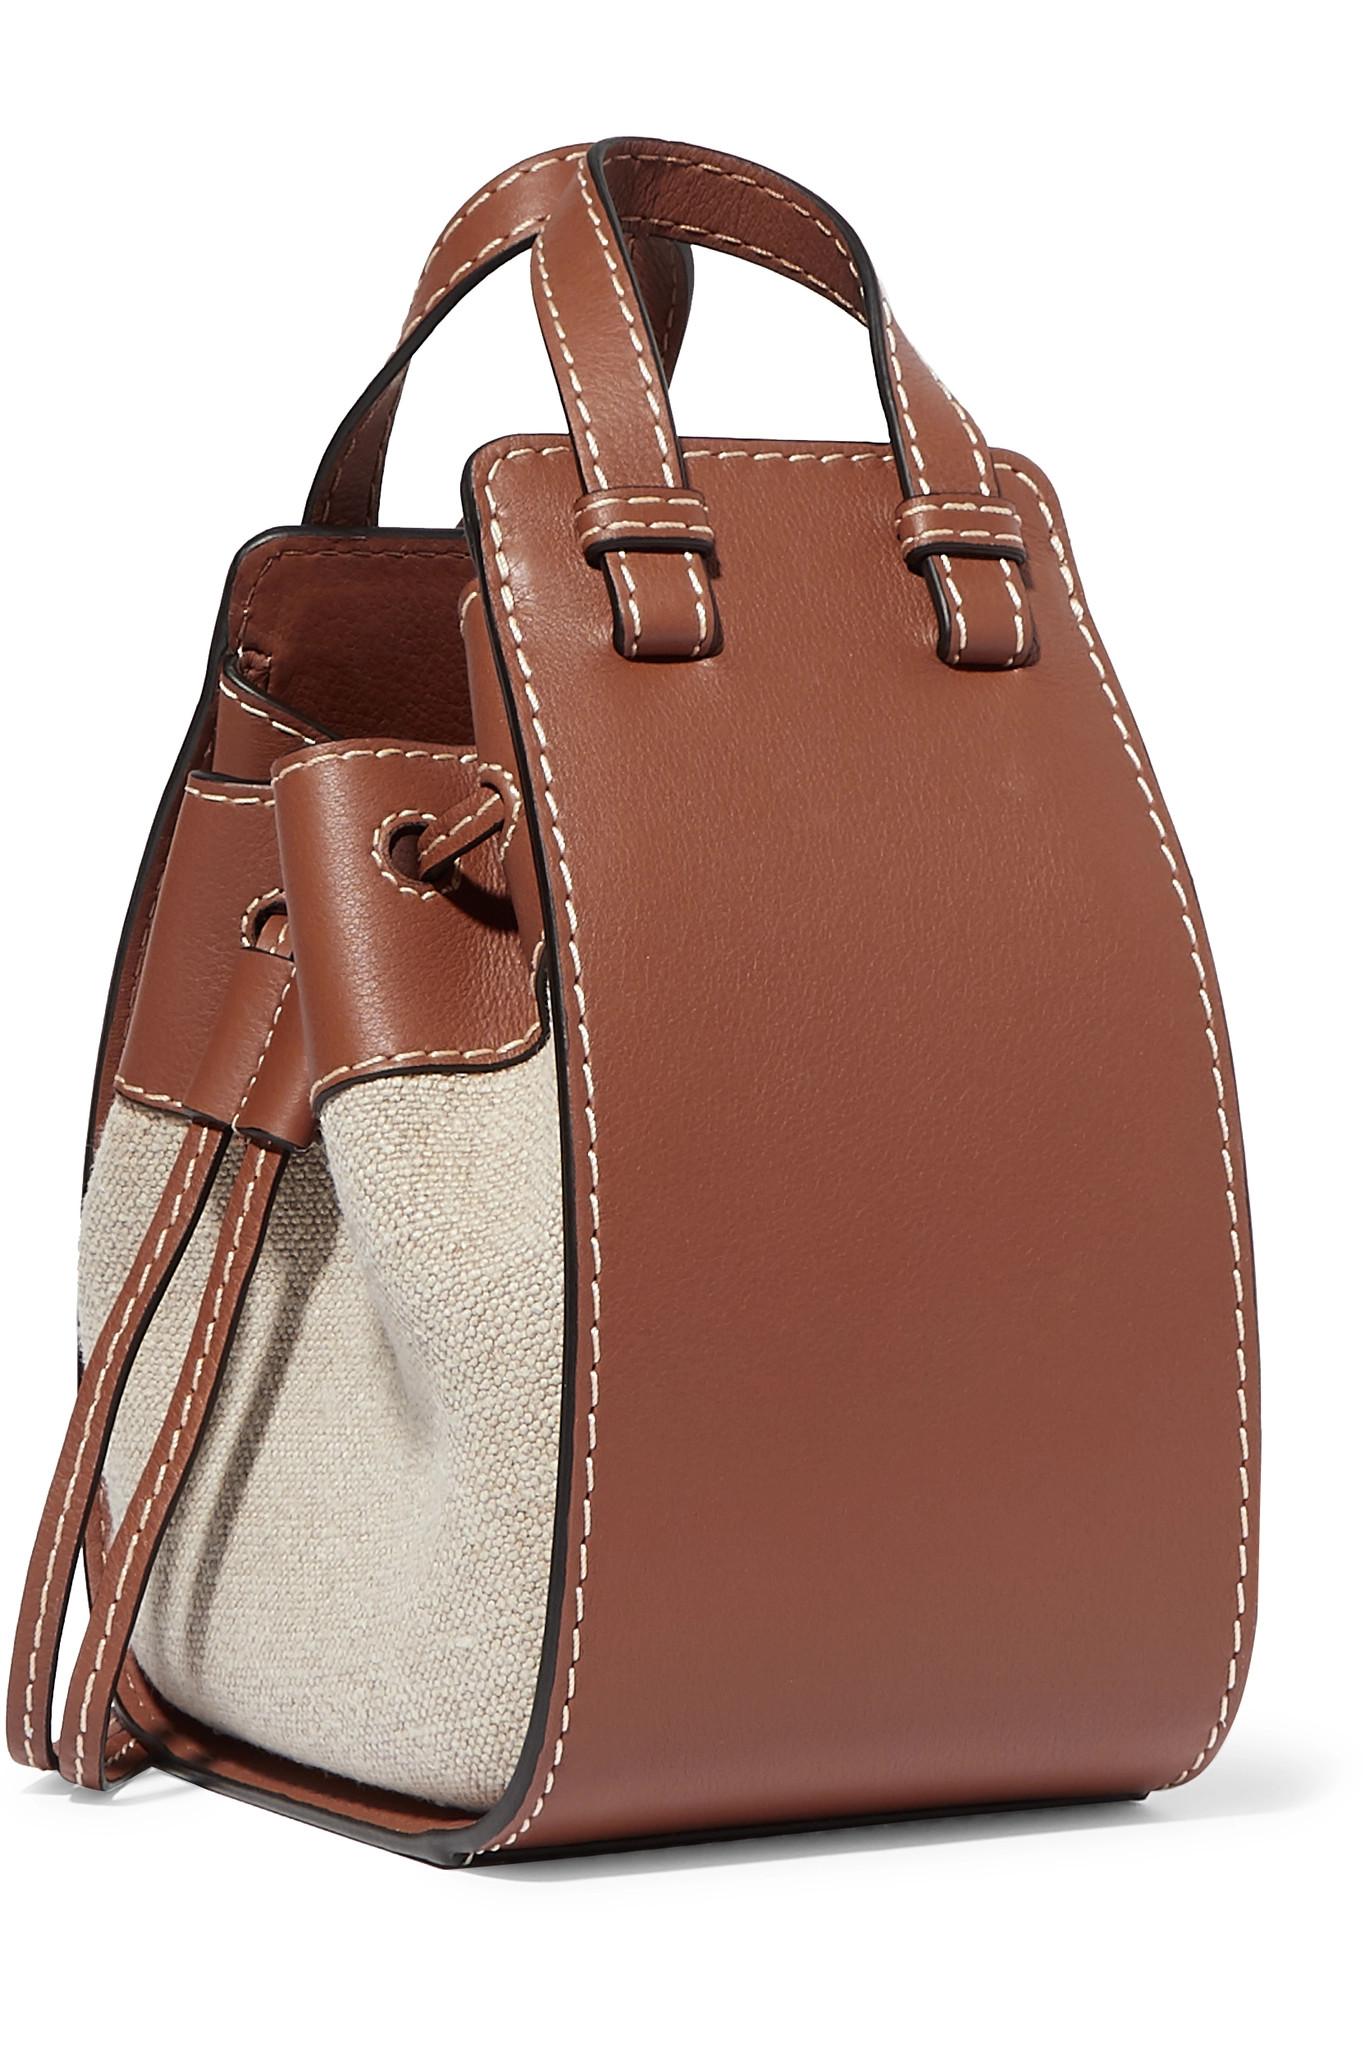 Loewe Hammock Small Leather Shoulder Bag